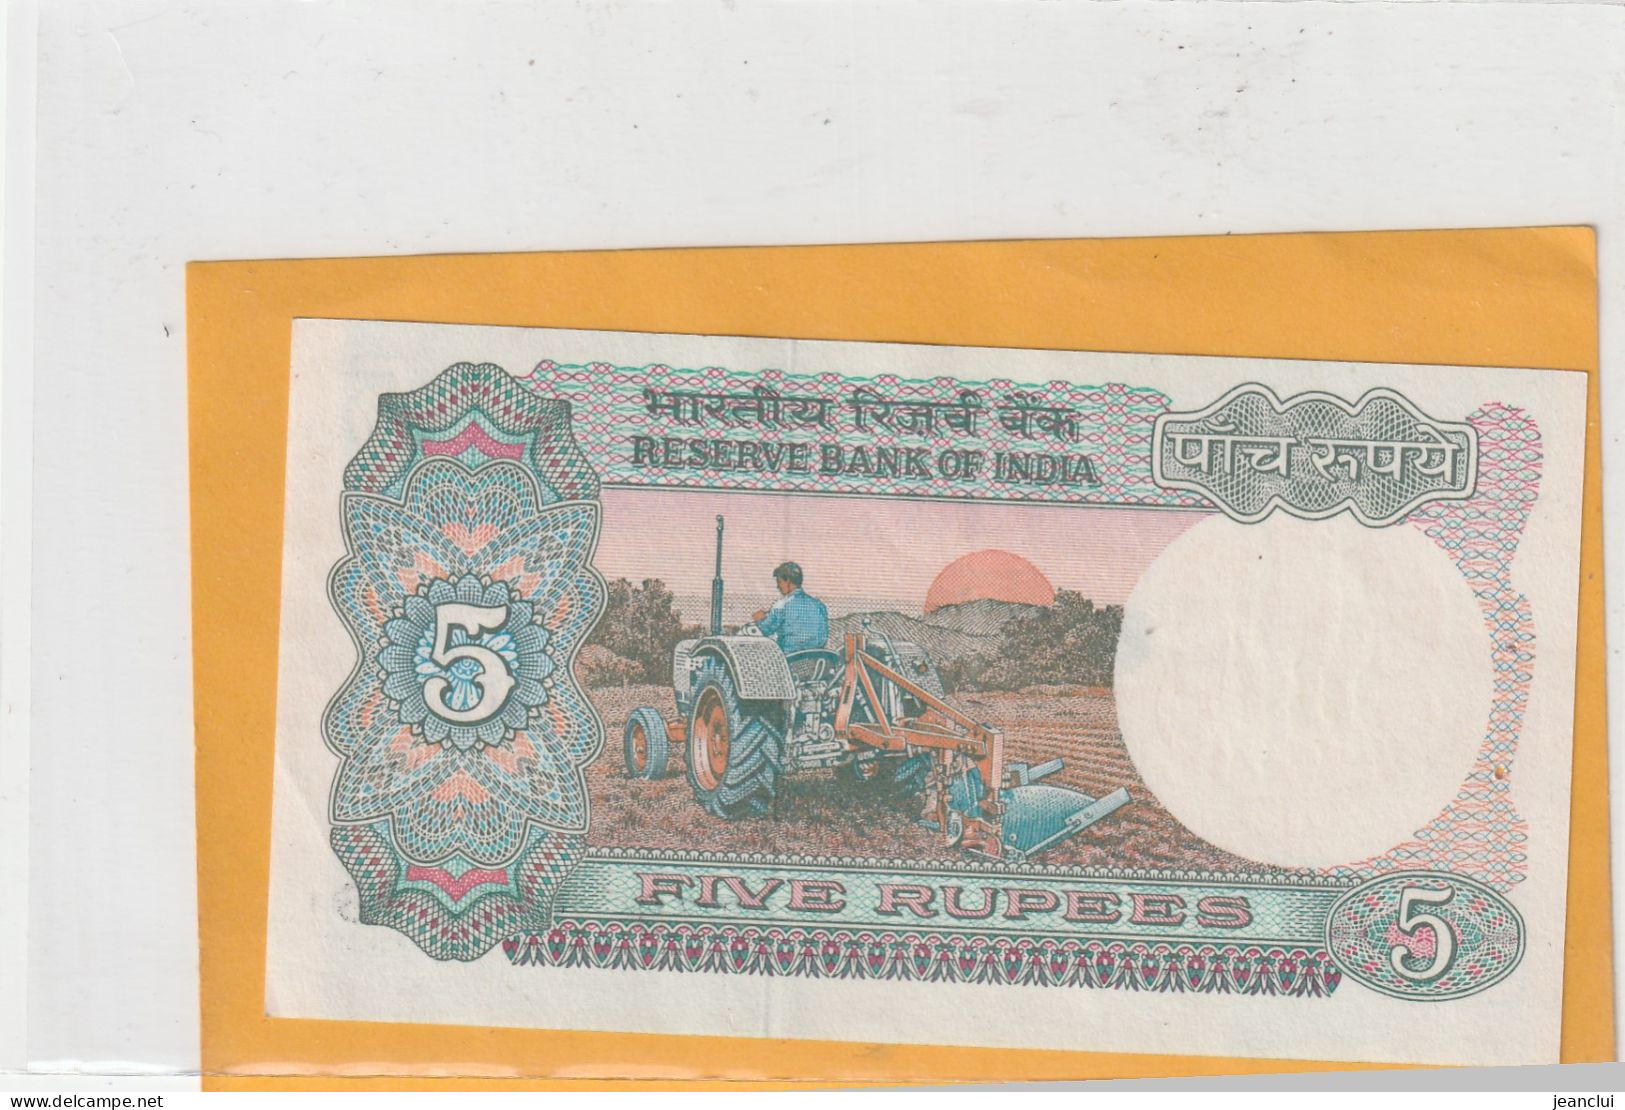 RESERVE BANK OF INDIA . 5 RUPEE .  N D .  N° 77S 152218  .  2 SCANNES - India